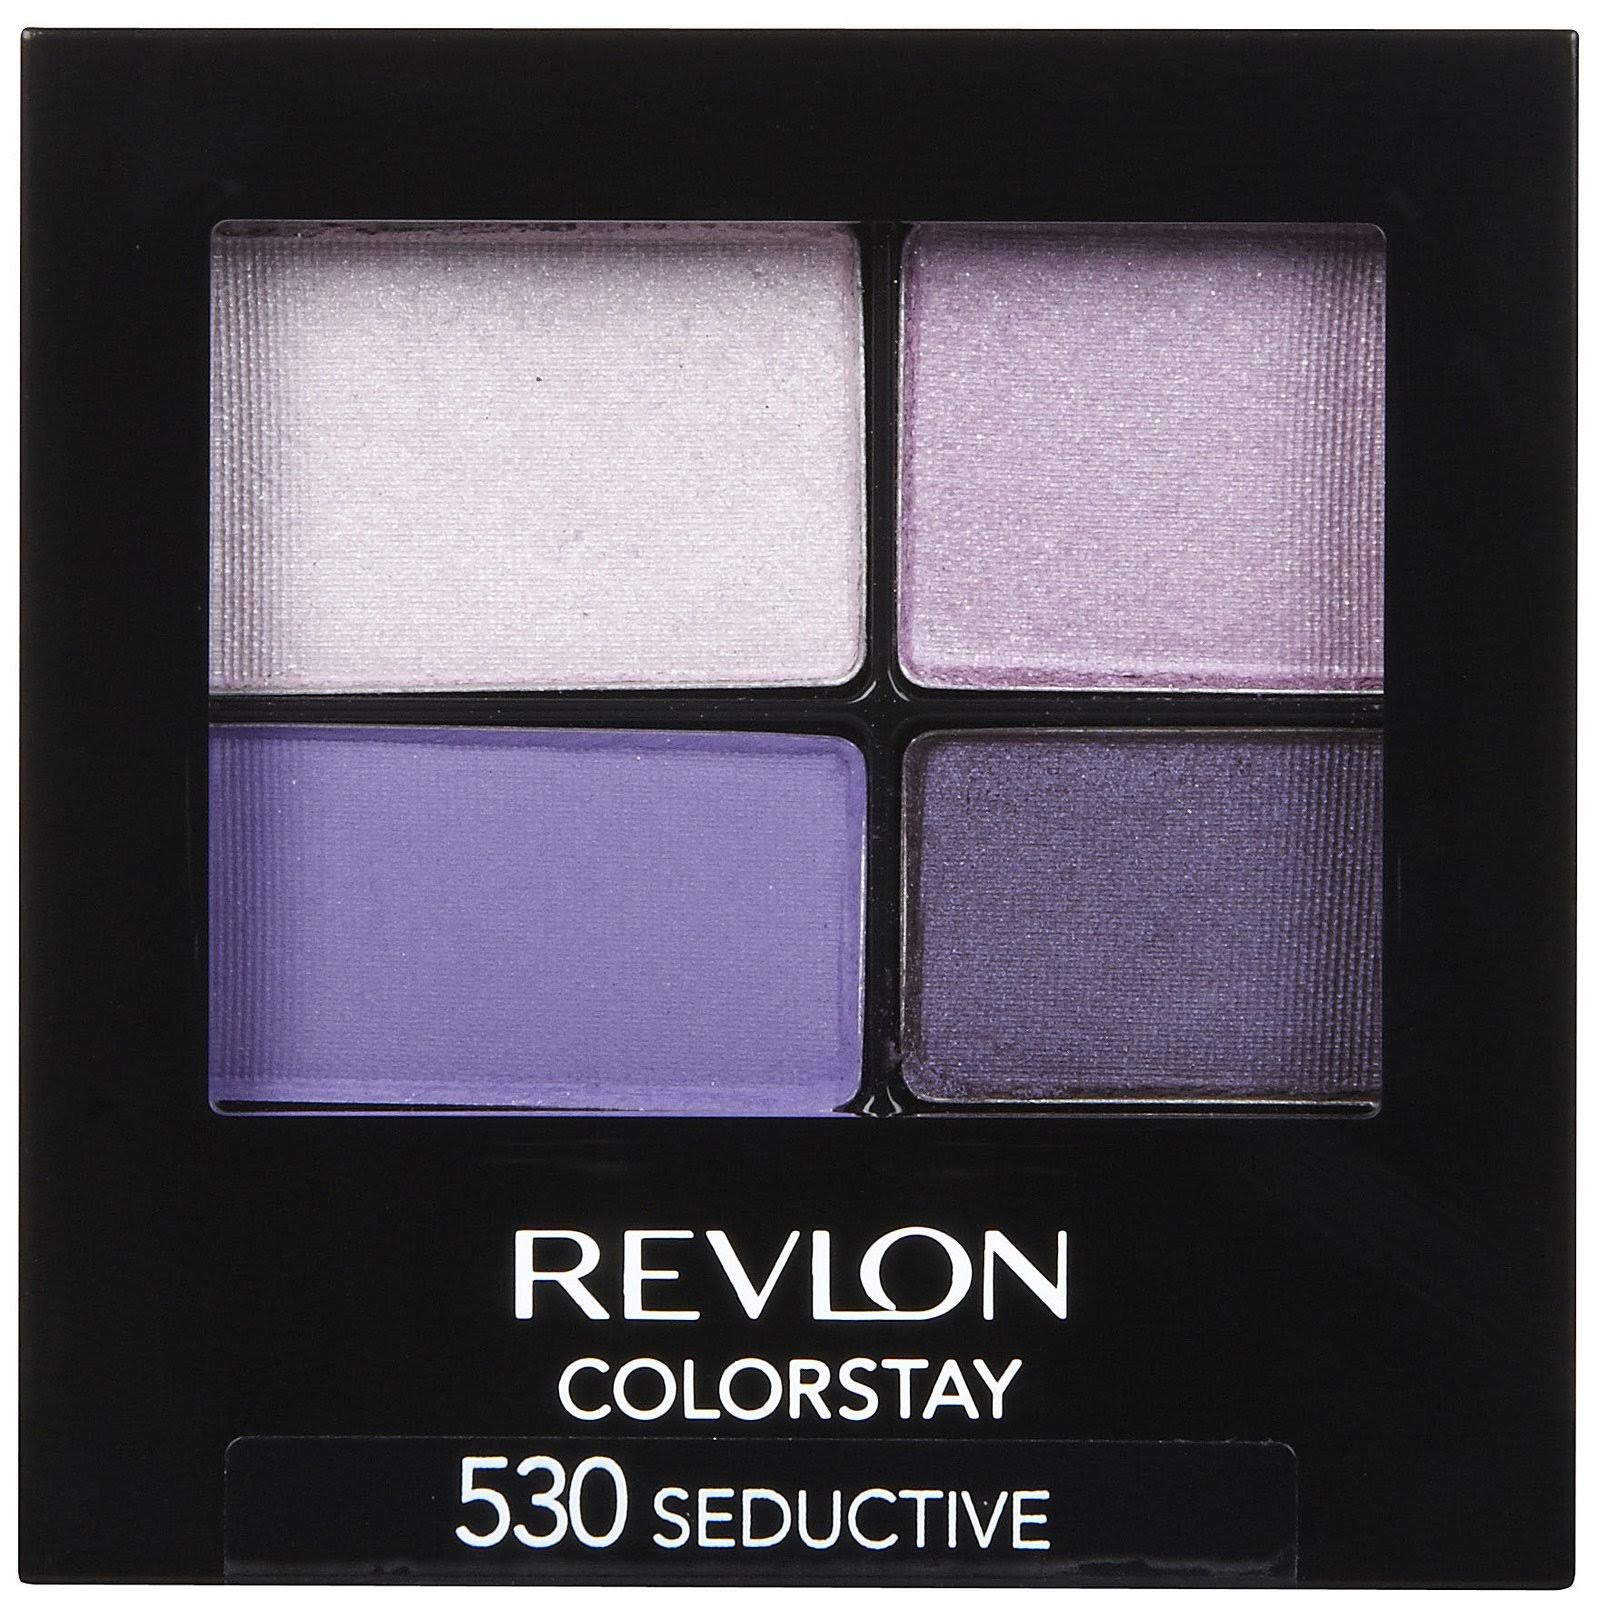 Revlon Colorstay 16 Hour Eye Shadow Quad - 530 Seductive